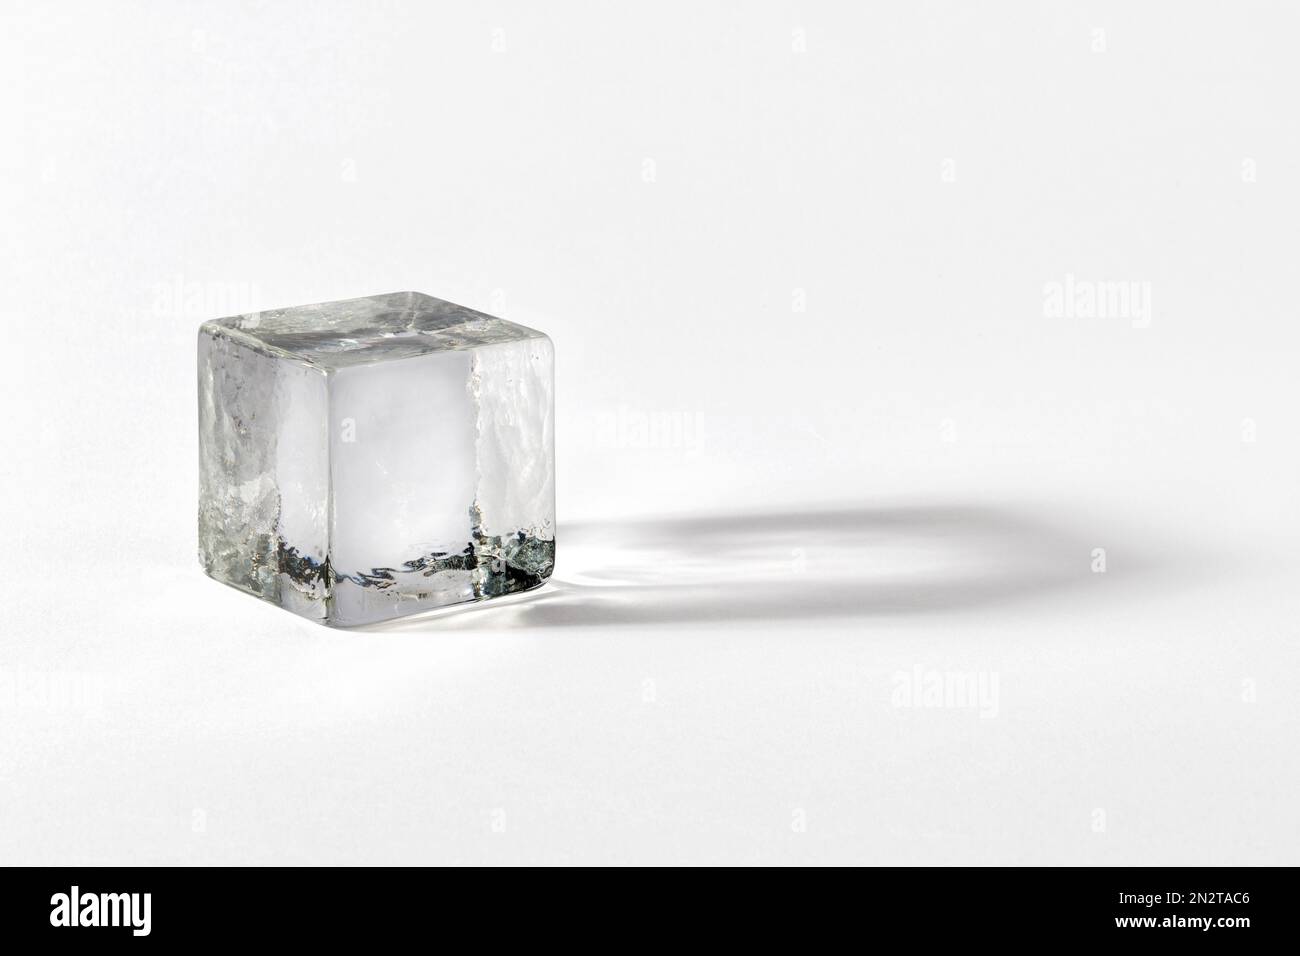 Cubo de cristal limpio hecho de vidrio frágil transparente que proyecta sombra sobre fondo gris Foto de stock